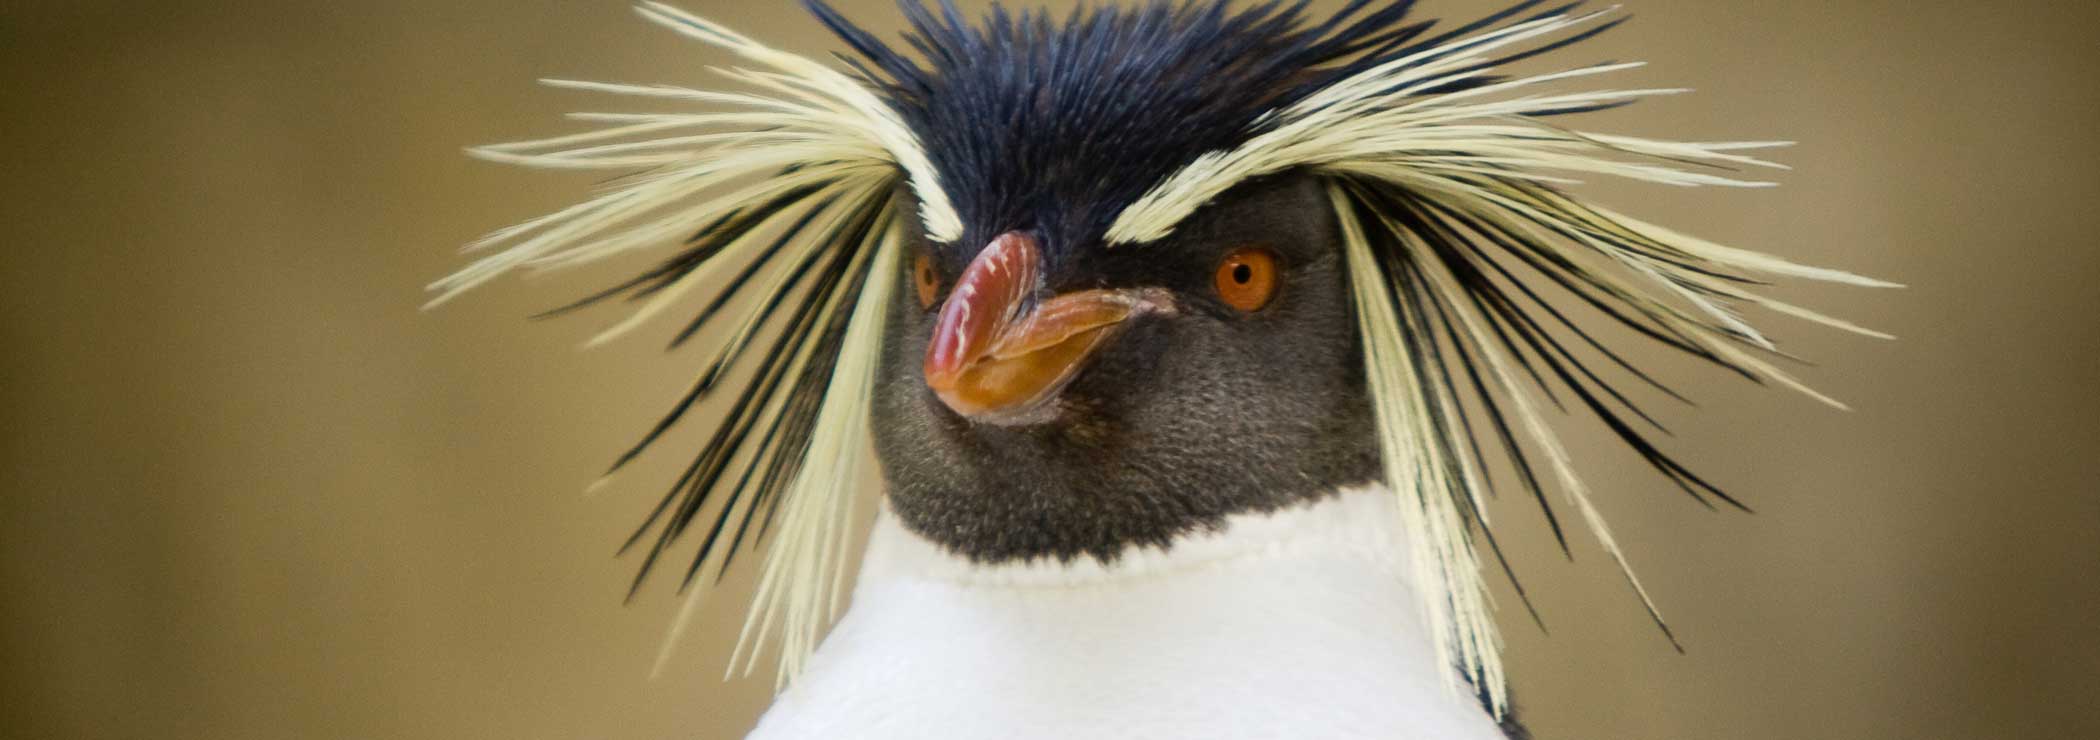 Southern Rockhopper Penguin, Eudyptes chrysocome